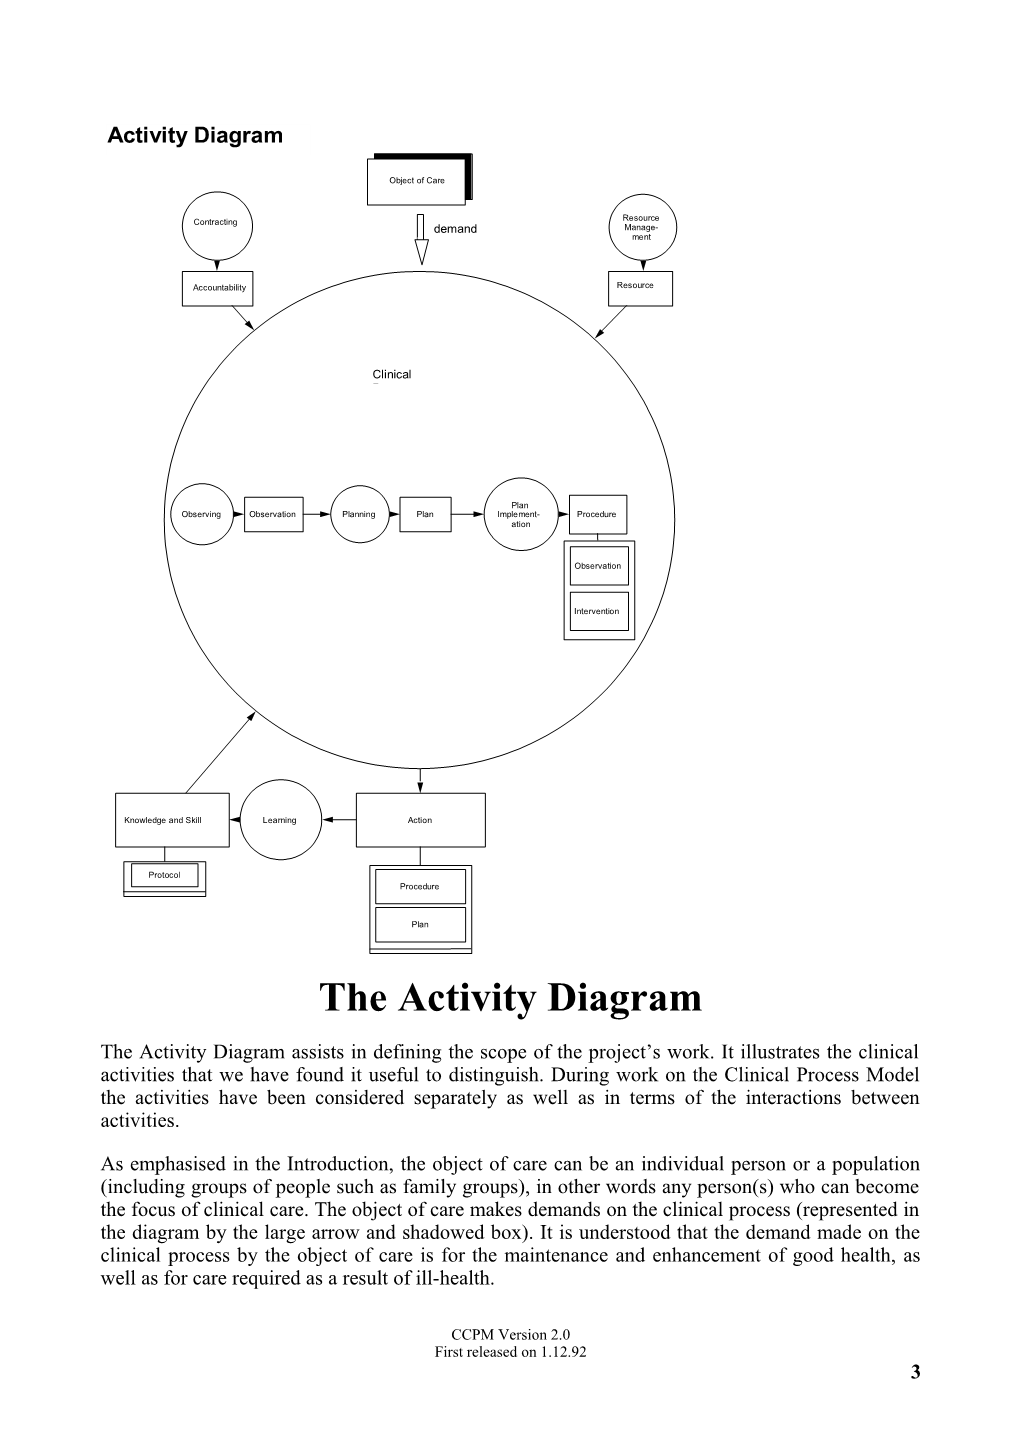 The Activity Diagram